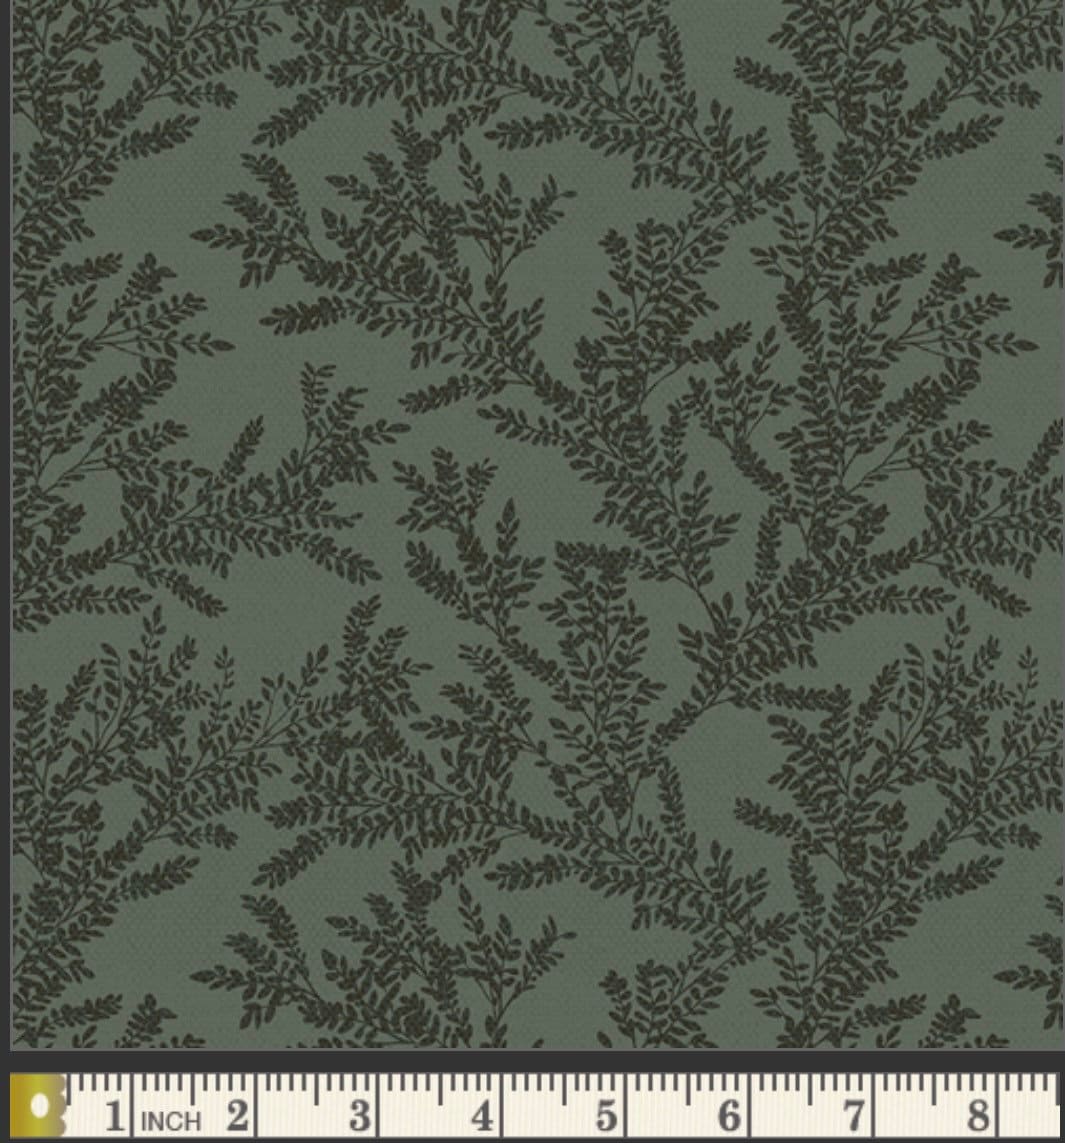 Foraged Foliage Spruce - Botanist Collection by Katarina Roccella - Art Gallery Fabrics - 100% Cotton